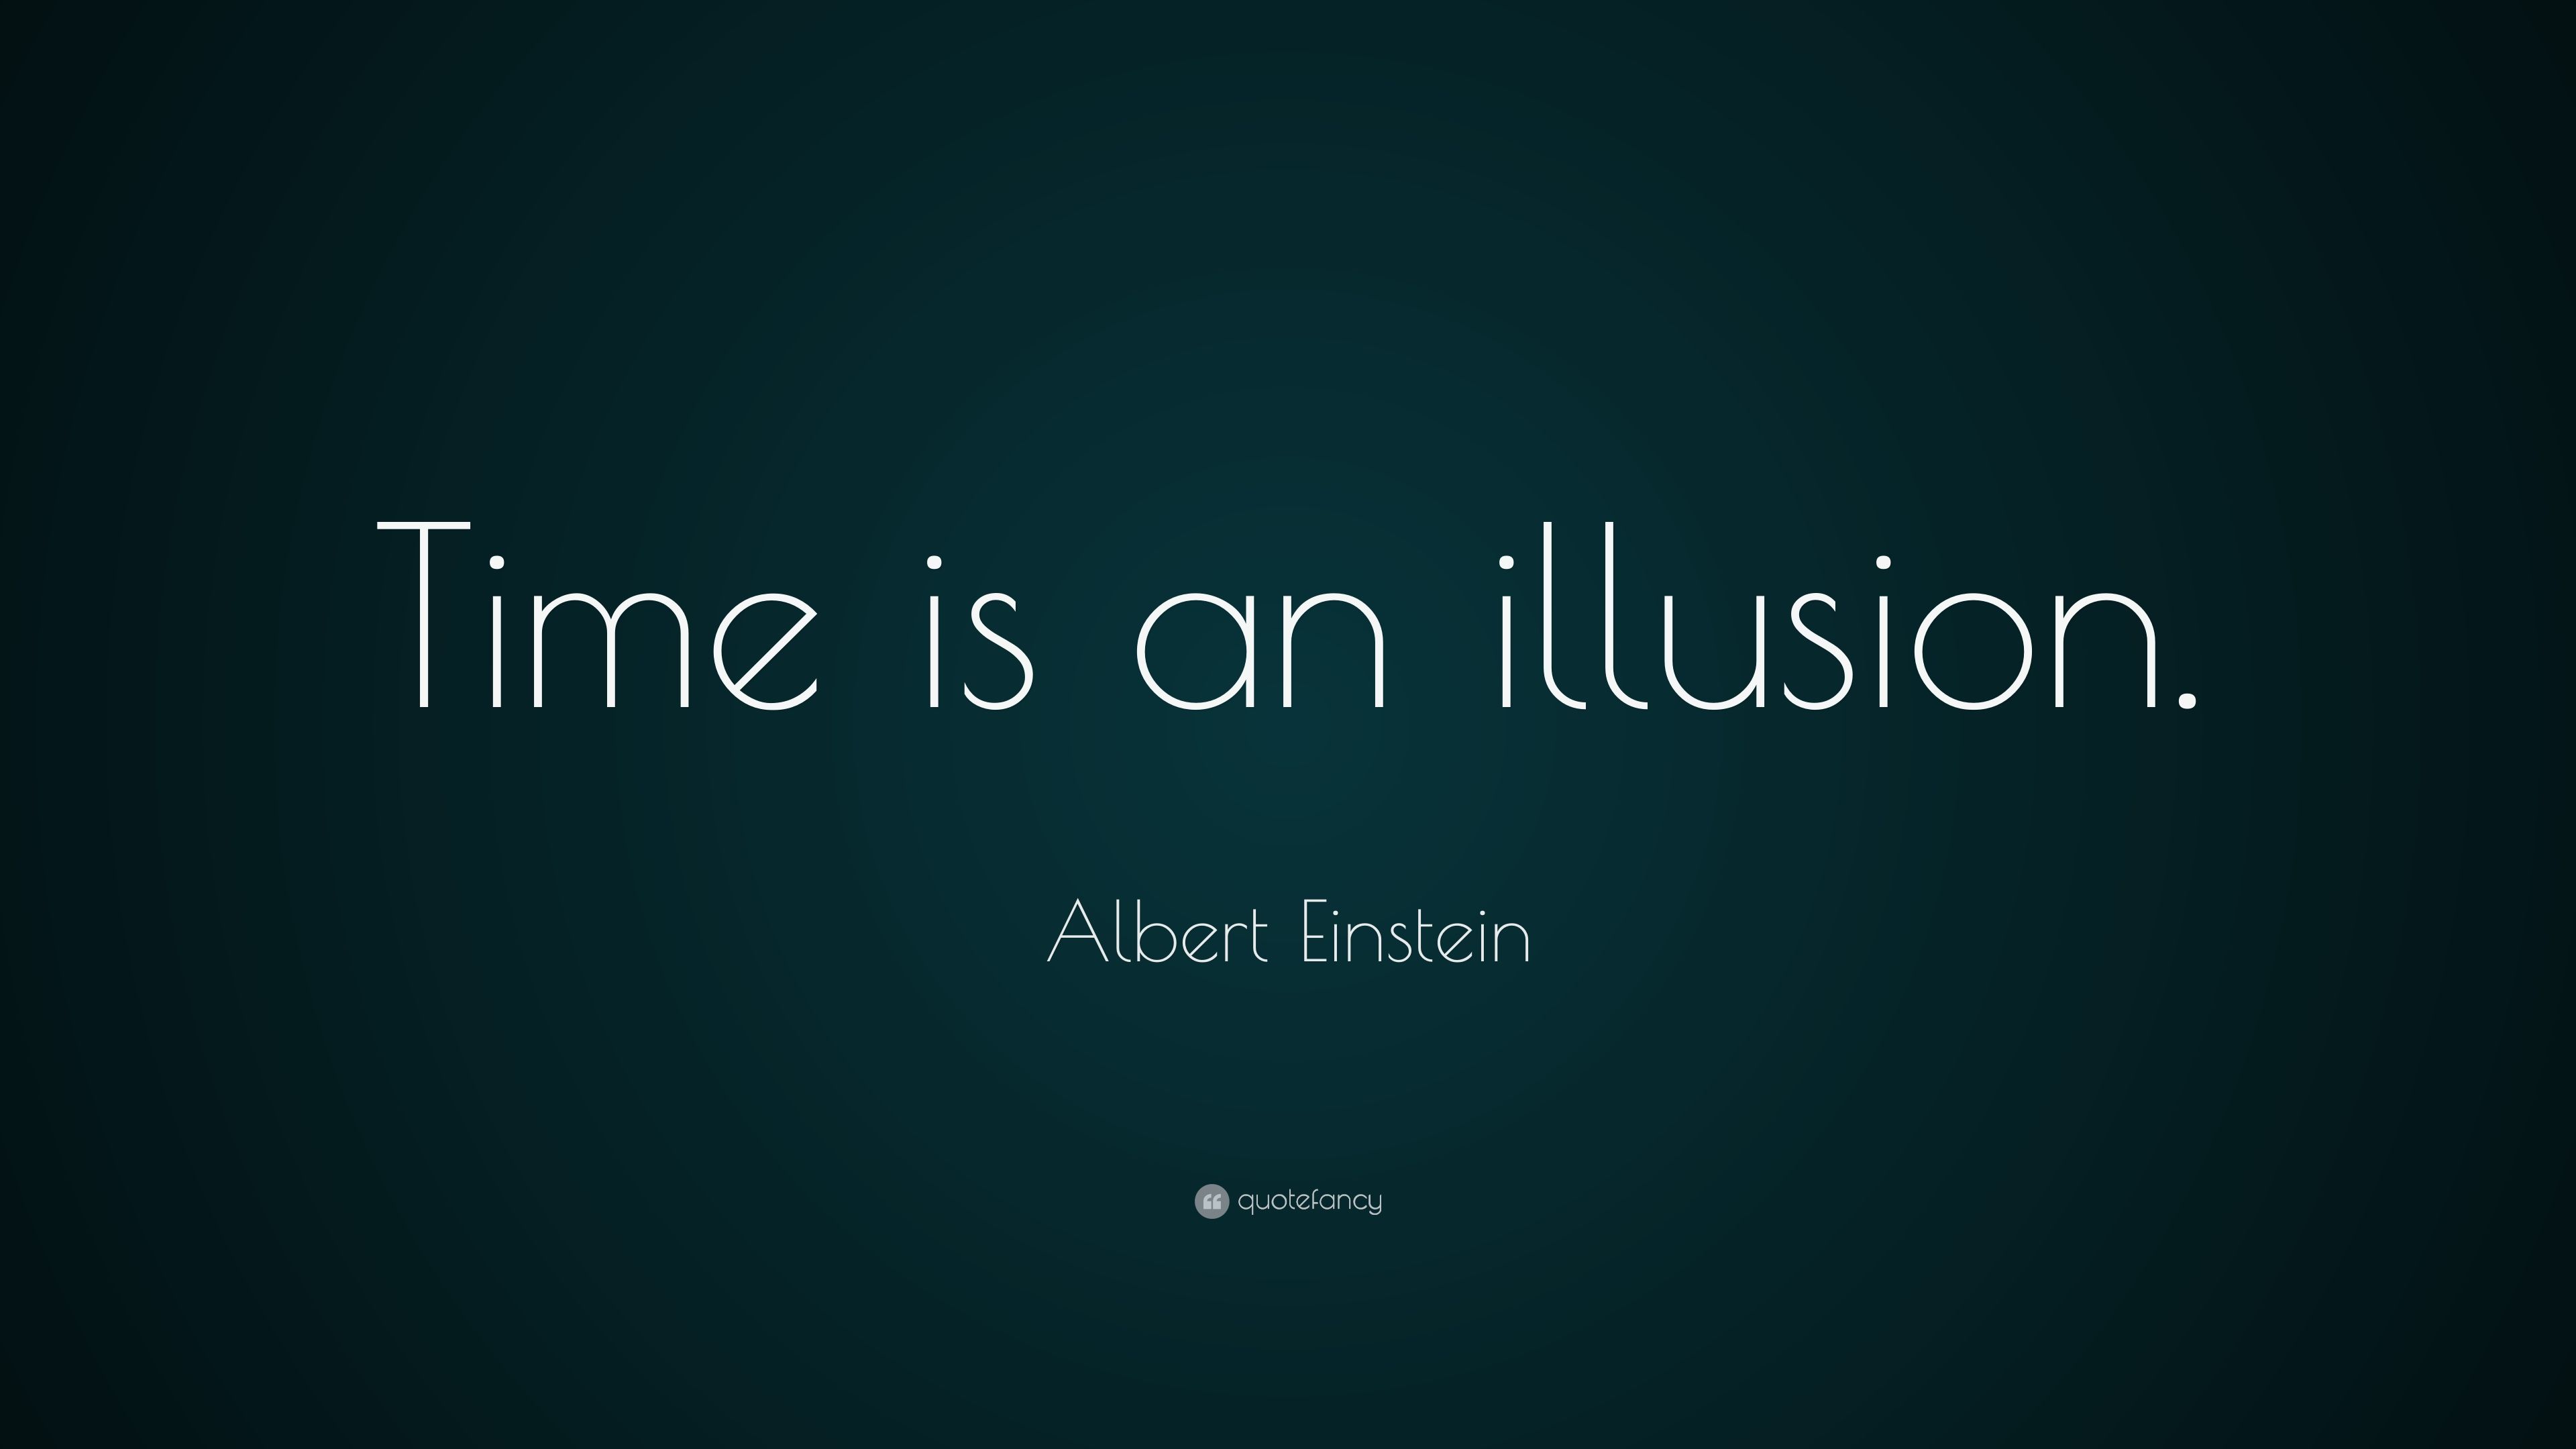 Albert Einstein Quote: “Time is an illusion.” (28 wallpaper)